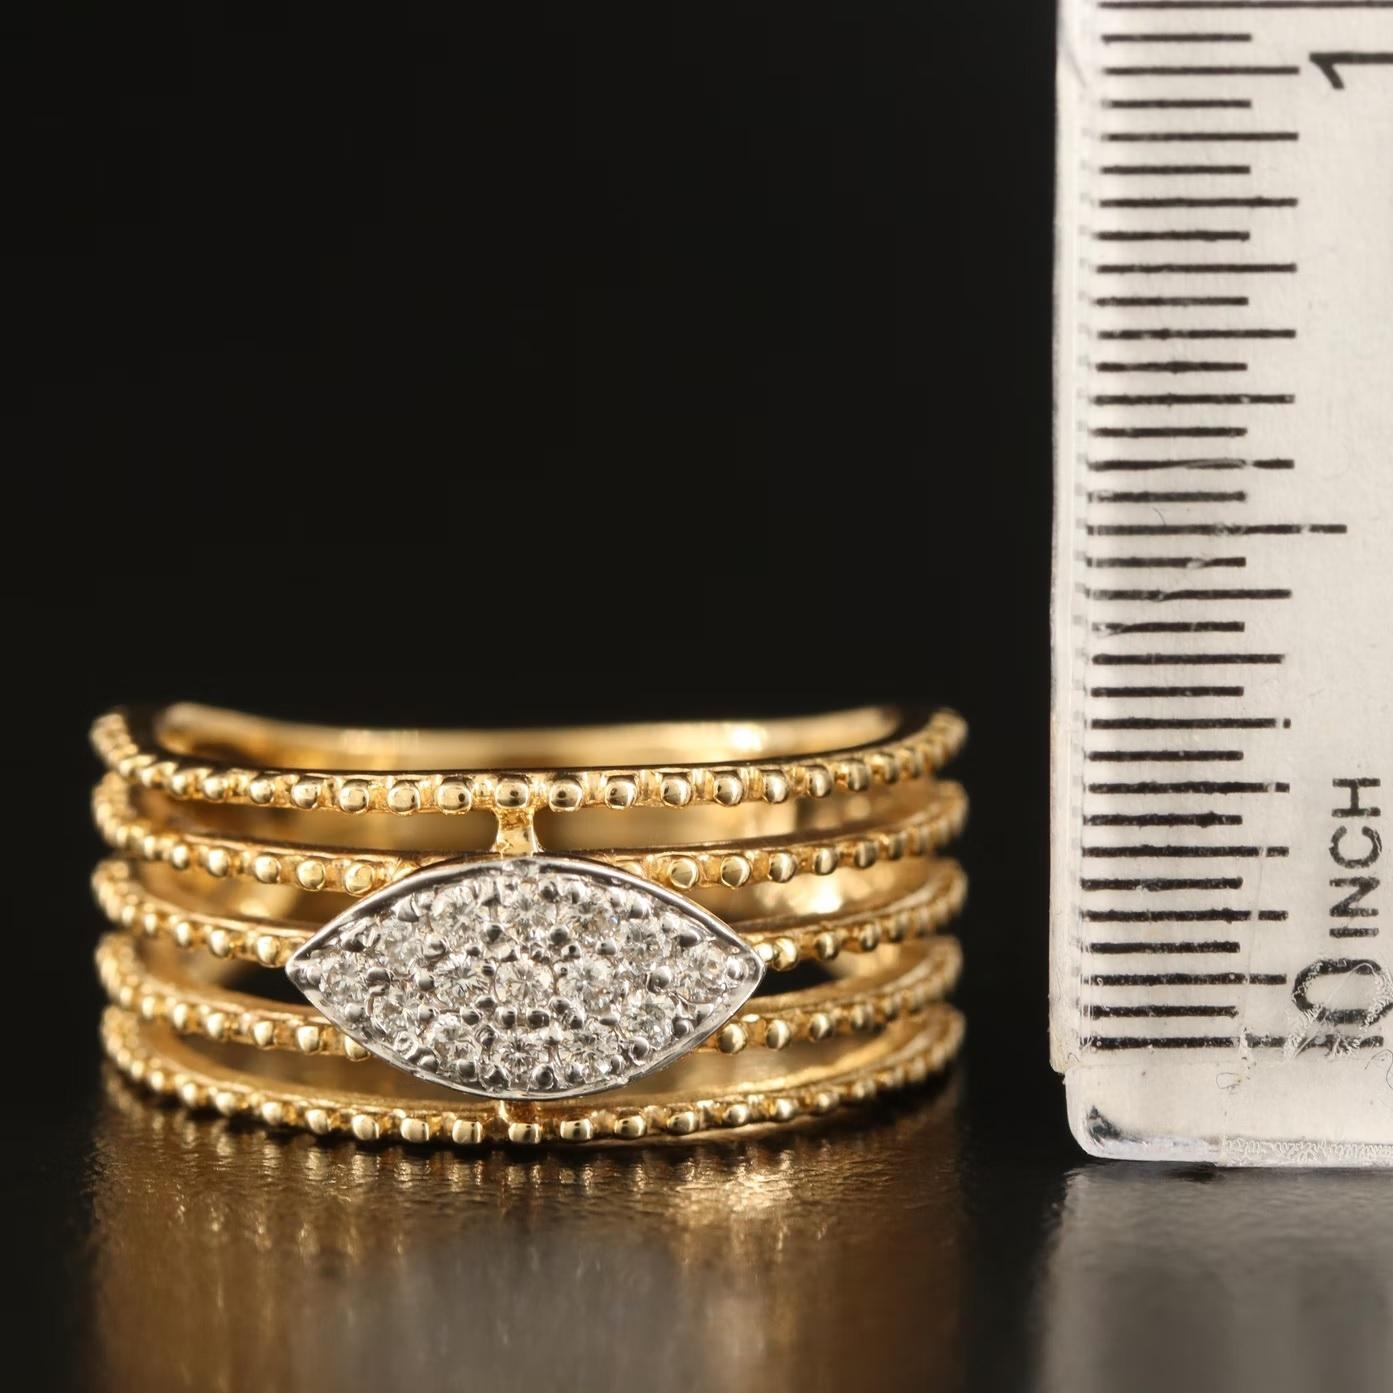 $4450 / Neu / Sonia Bitton Designer Diamantring / 14K Gold Damen